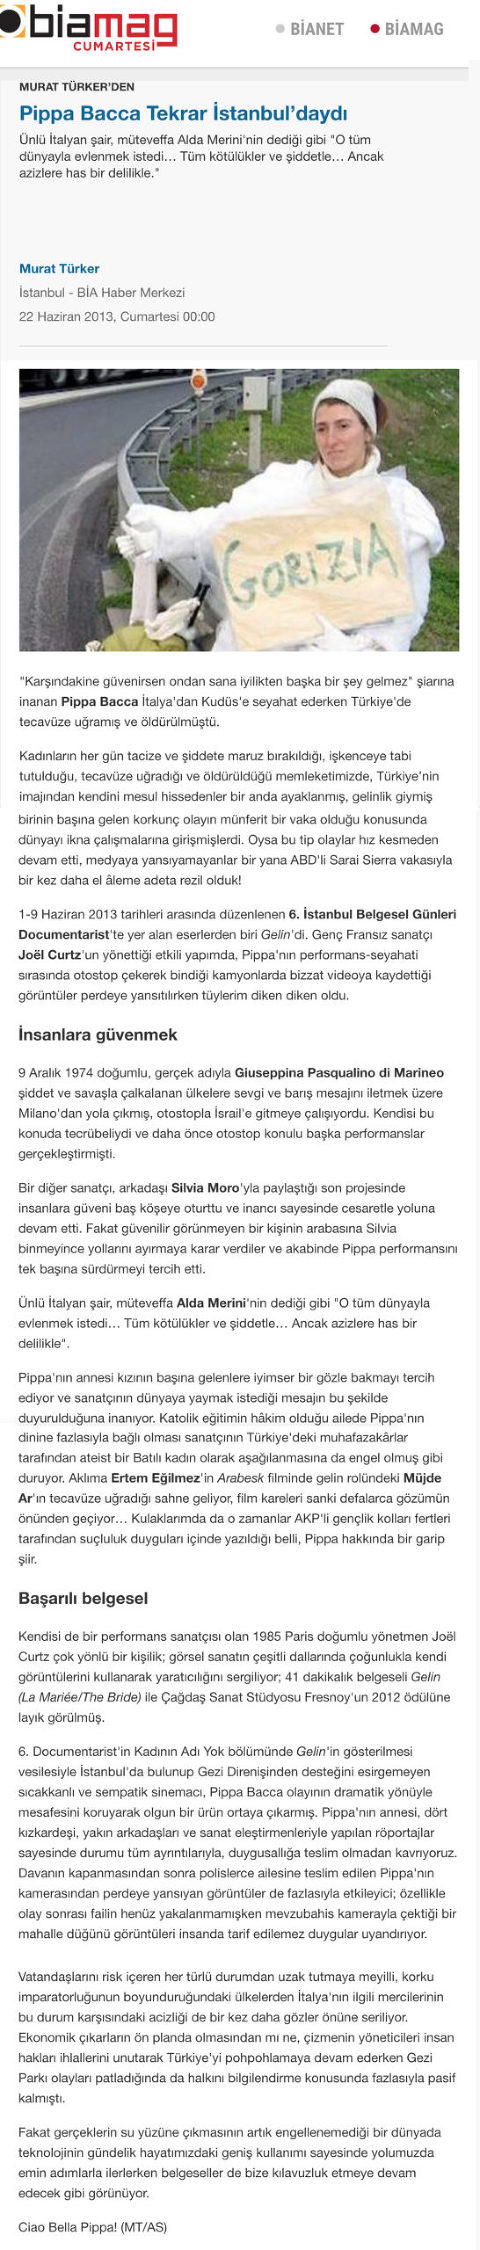 Pippa Bacca Turkish article